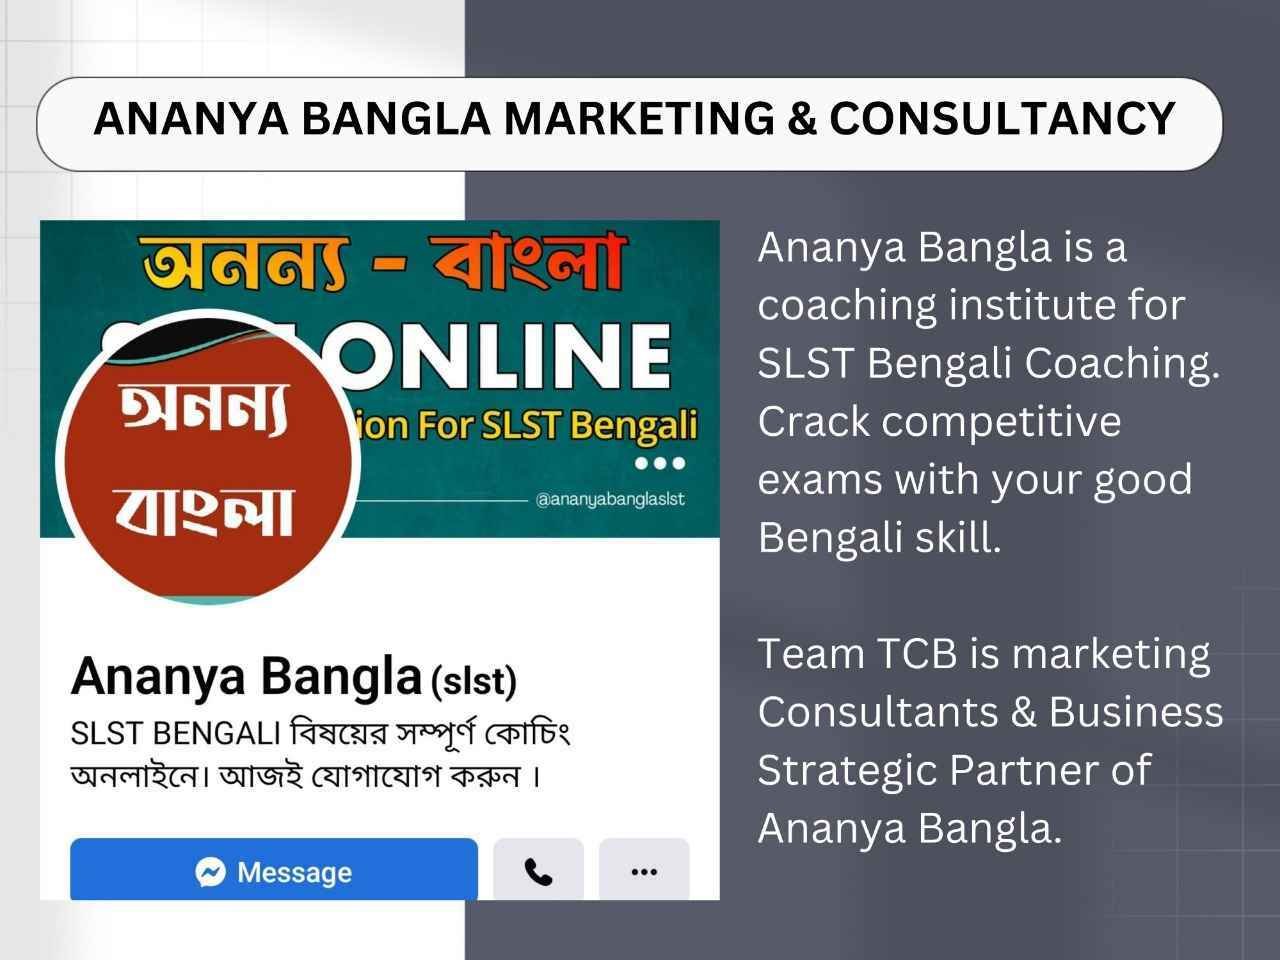 Ananya Bangla Marketing & Consultancy – Team TCB